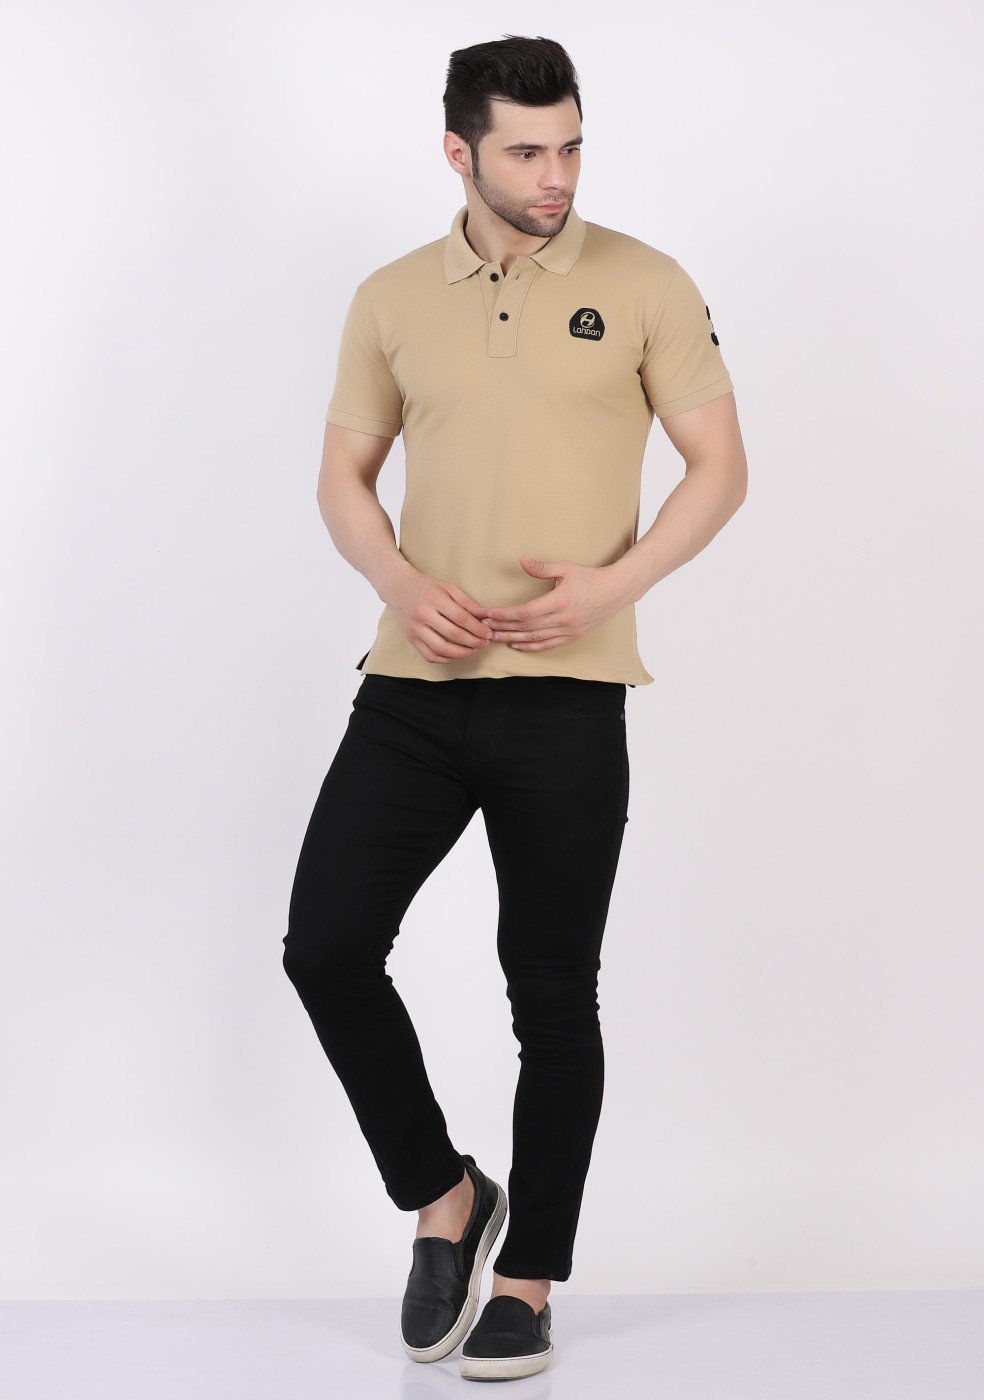 Collar Casual Wear Matty Polo T- Shirt  For Men